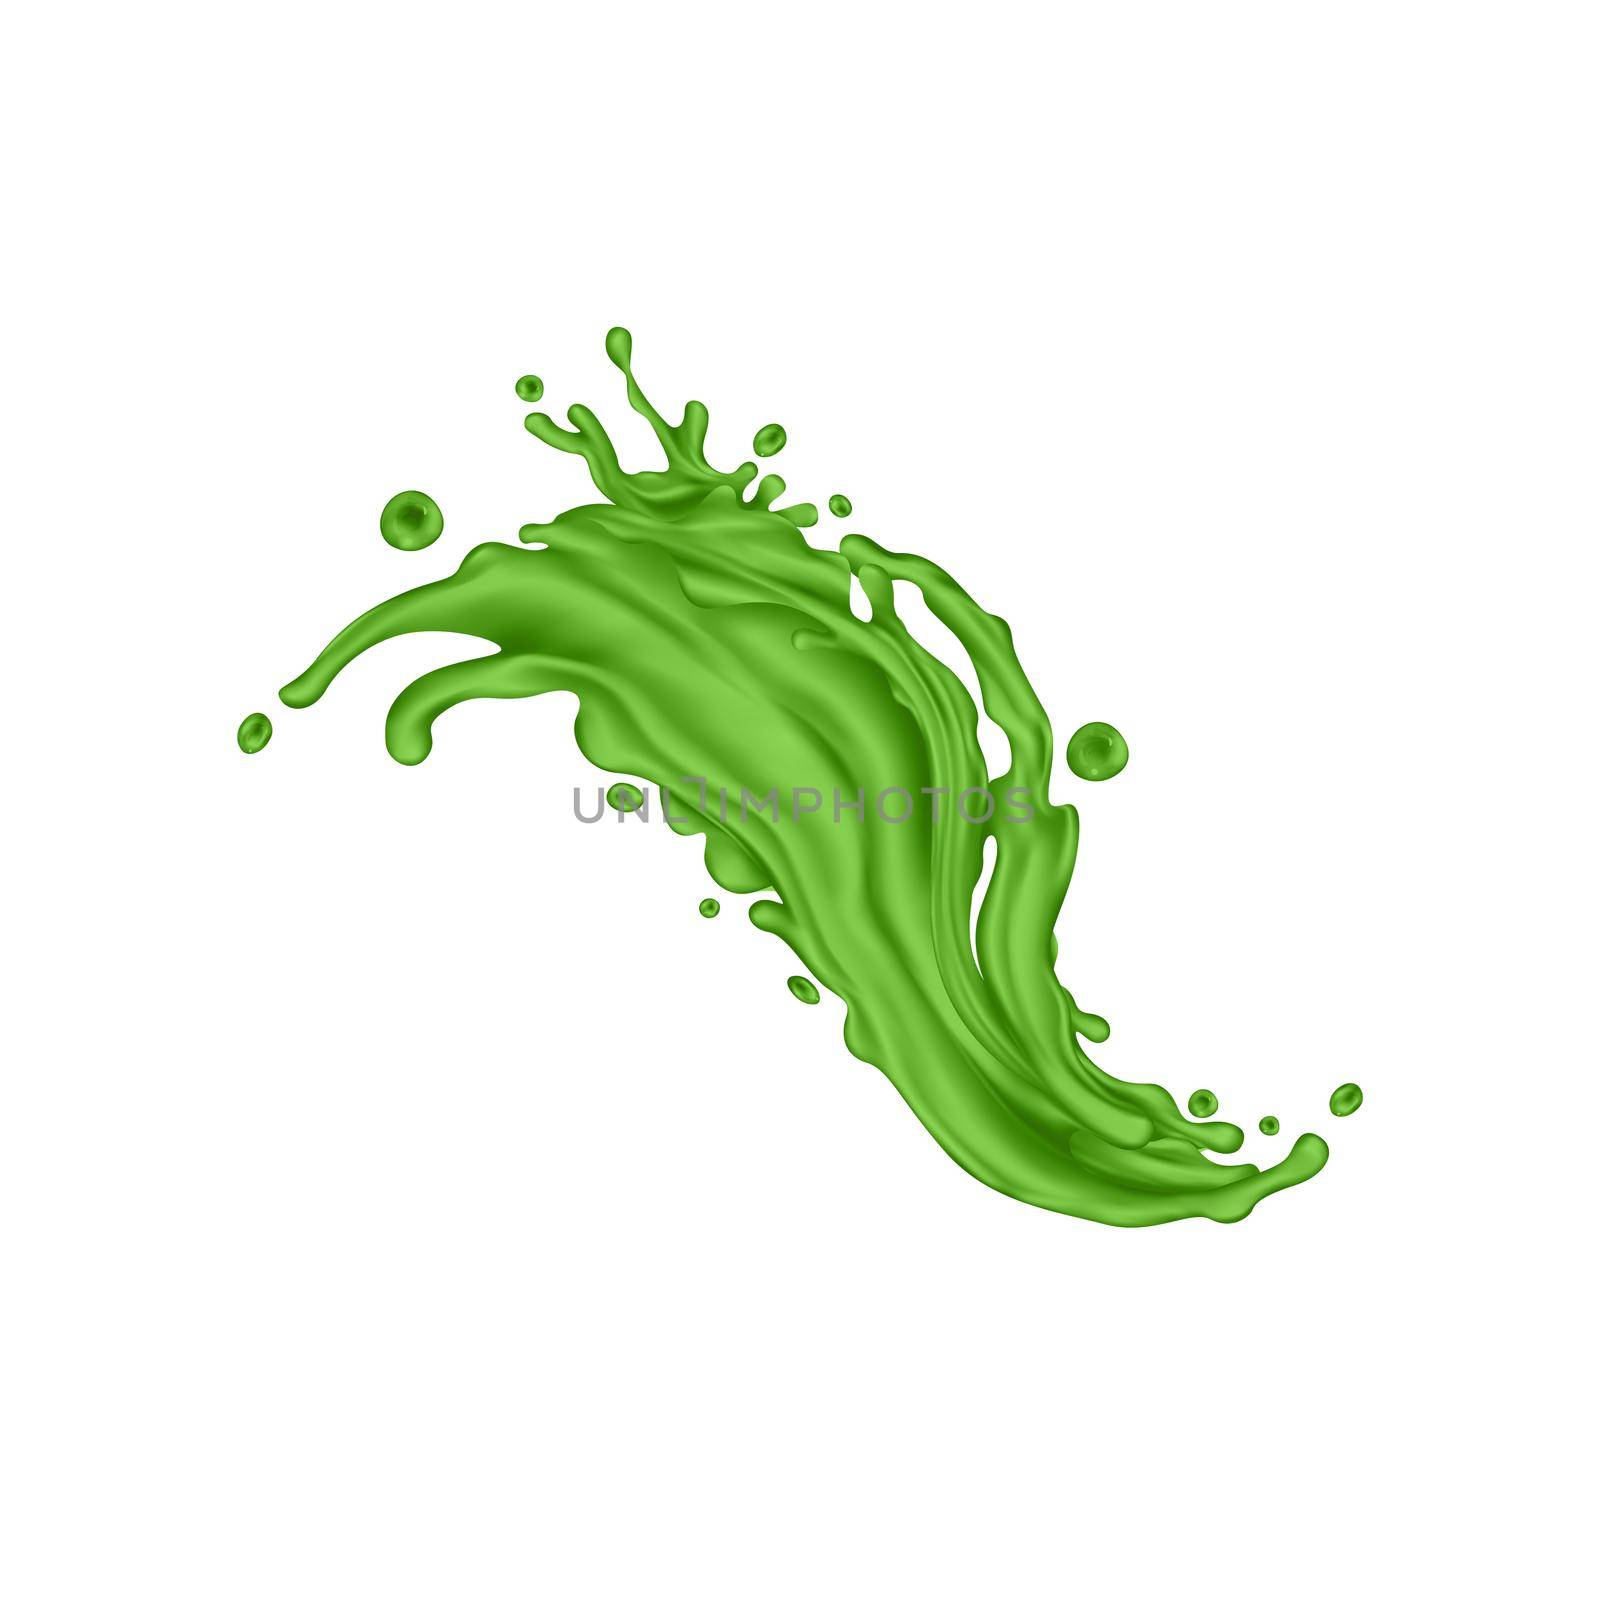 Green juice dynamic splash. Illustration in realistic style.